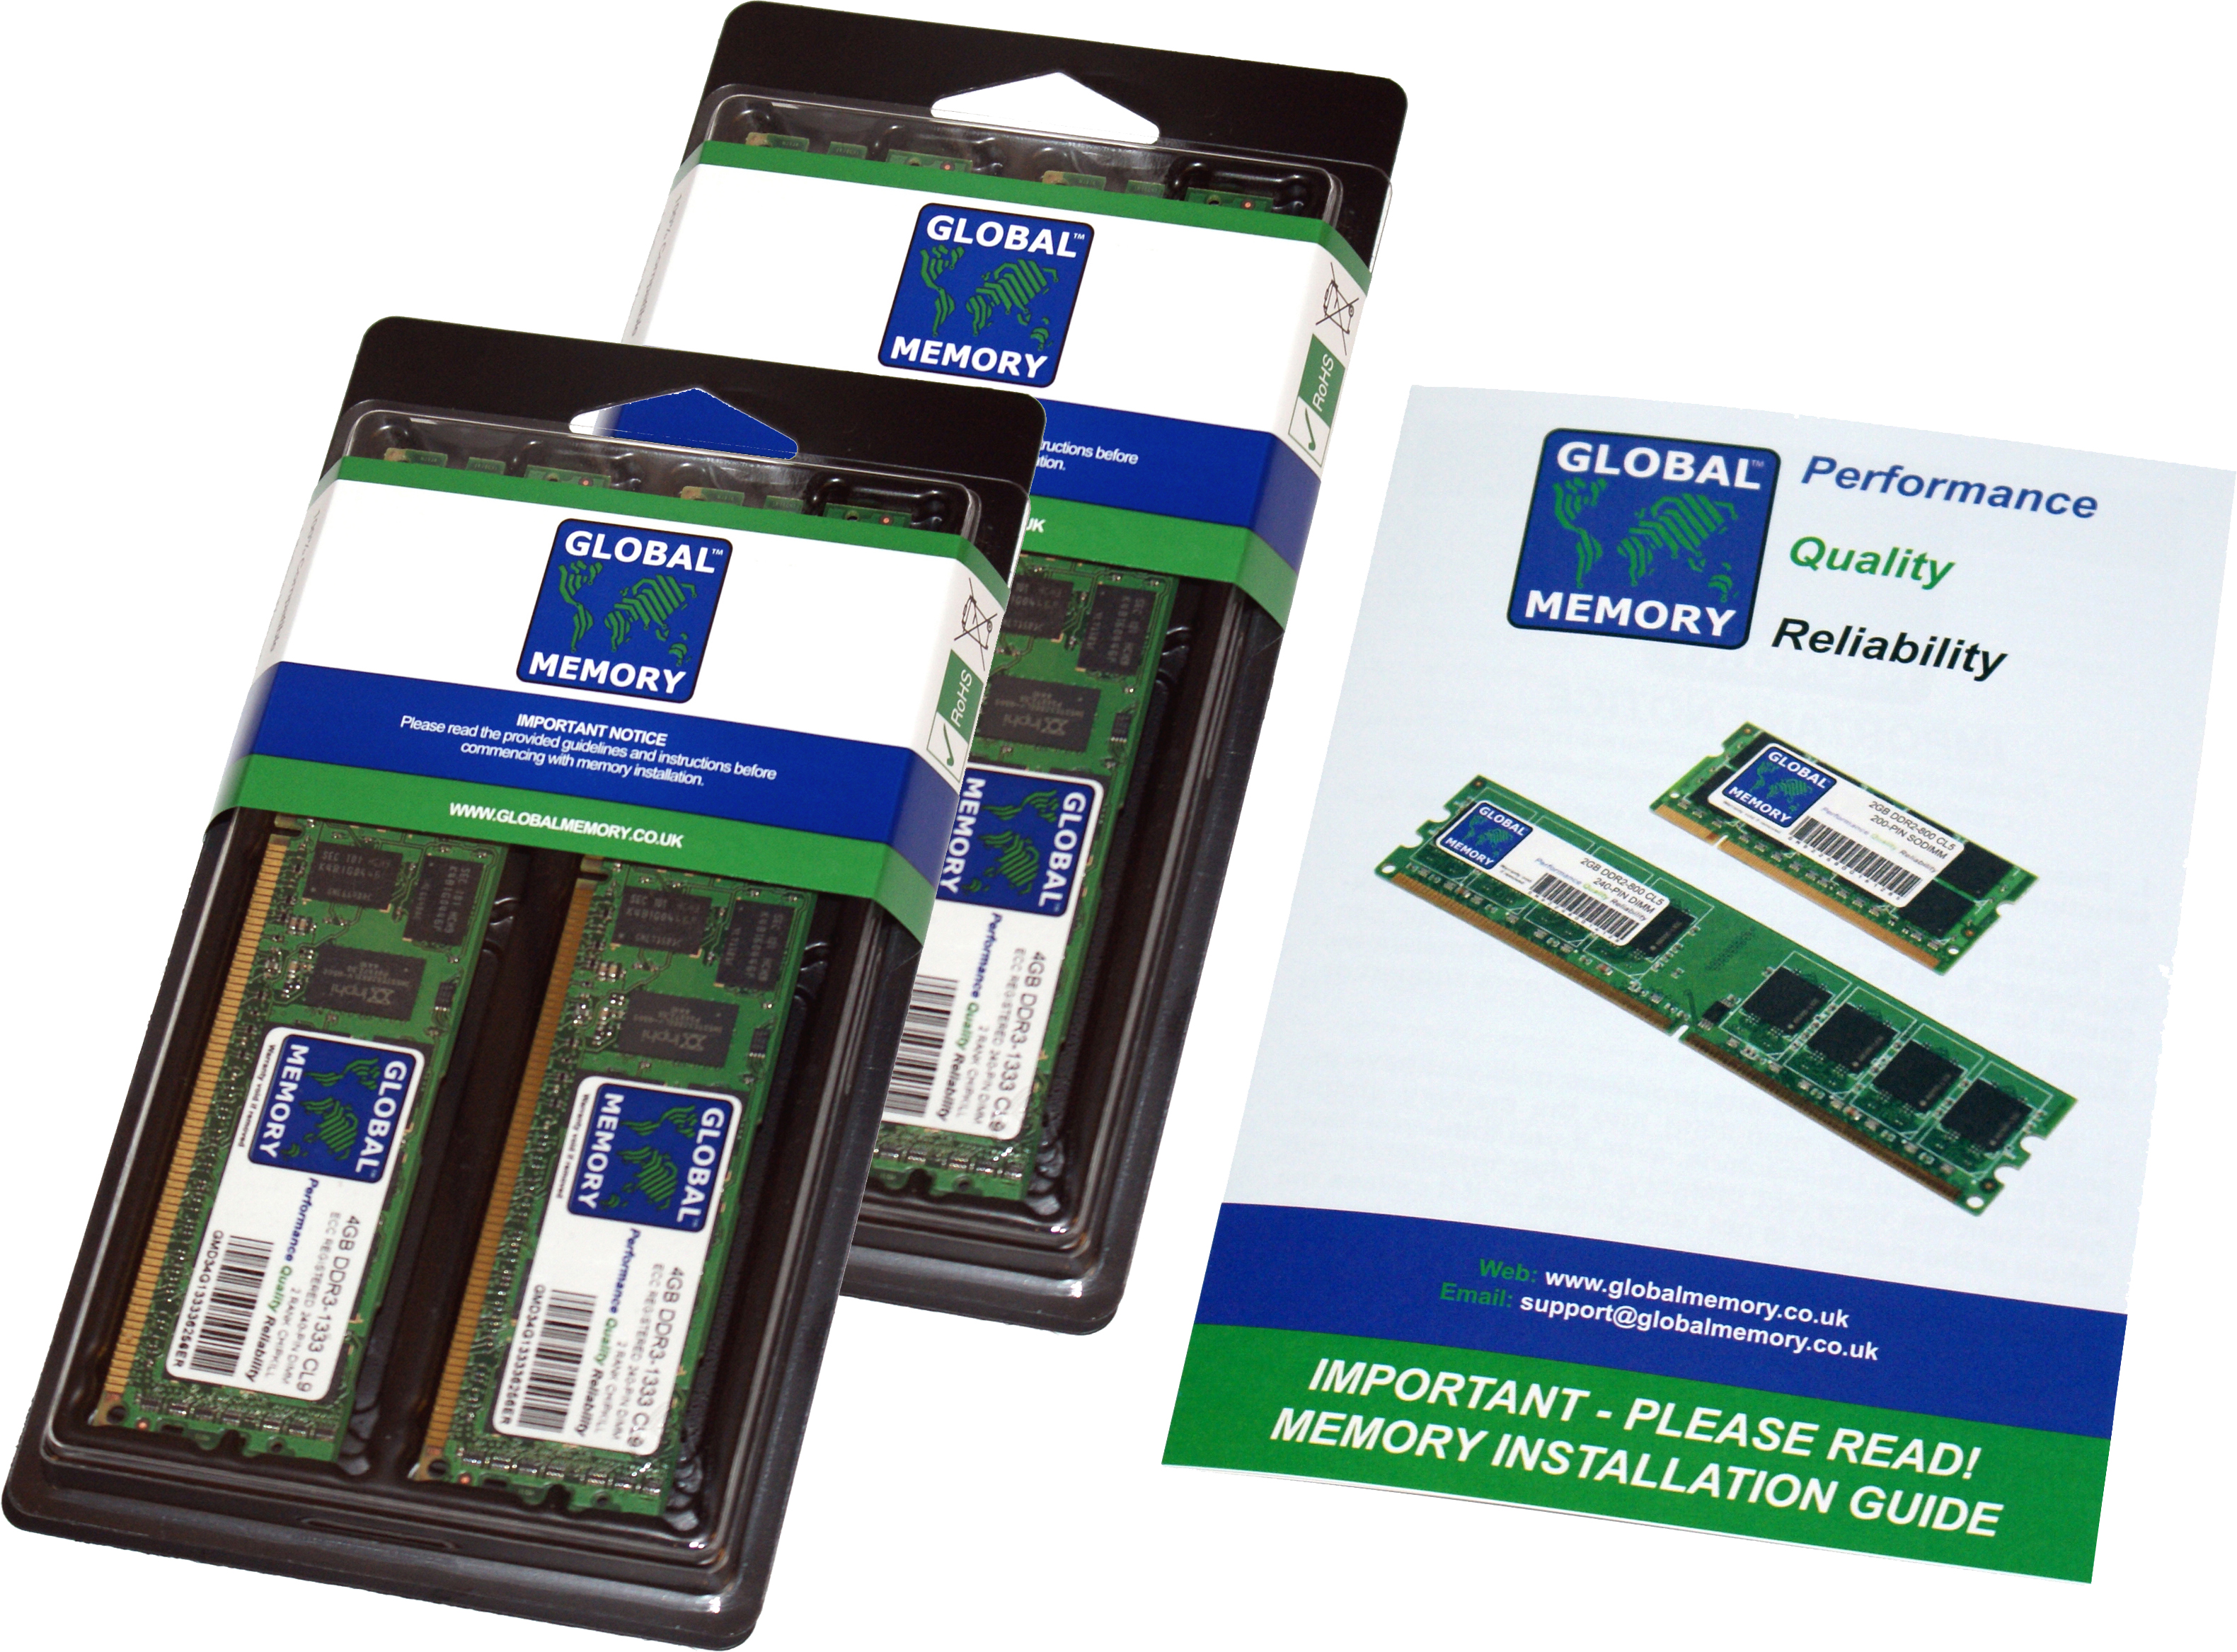 128GB (4 x 32GB) DDR4 2400MHz PC4-19200 288-PIN ECC REGISTERED DIMM (RDIMM) MEMORY RAM KIT FOR SERVERS/WORKSTATIONS/MOTHERBOARDS (8 RANK KIT CHIPKILL)